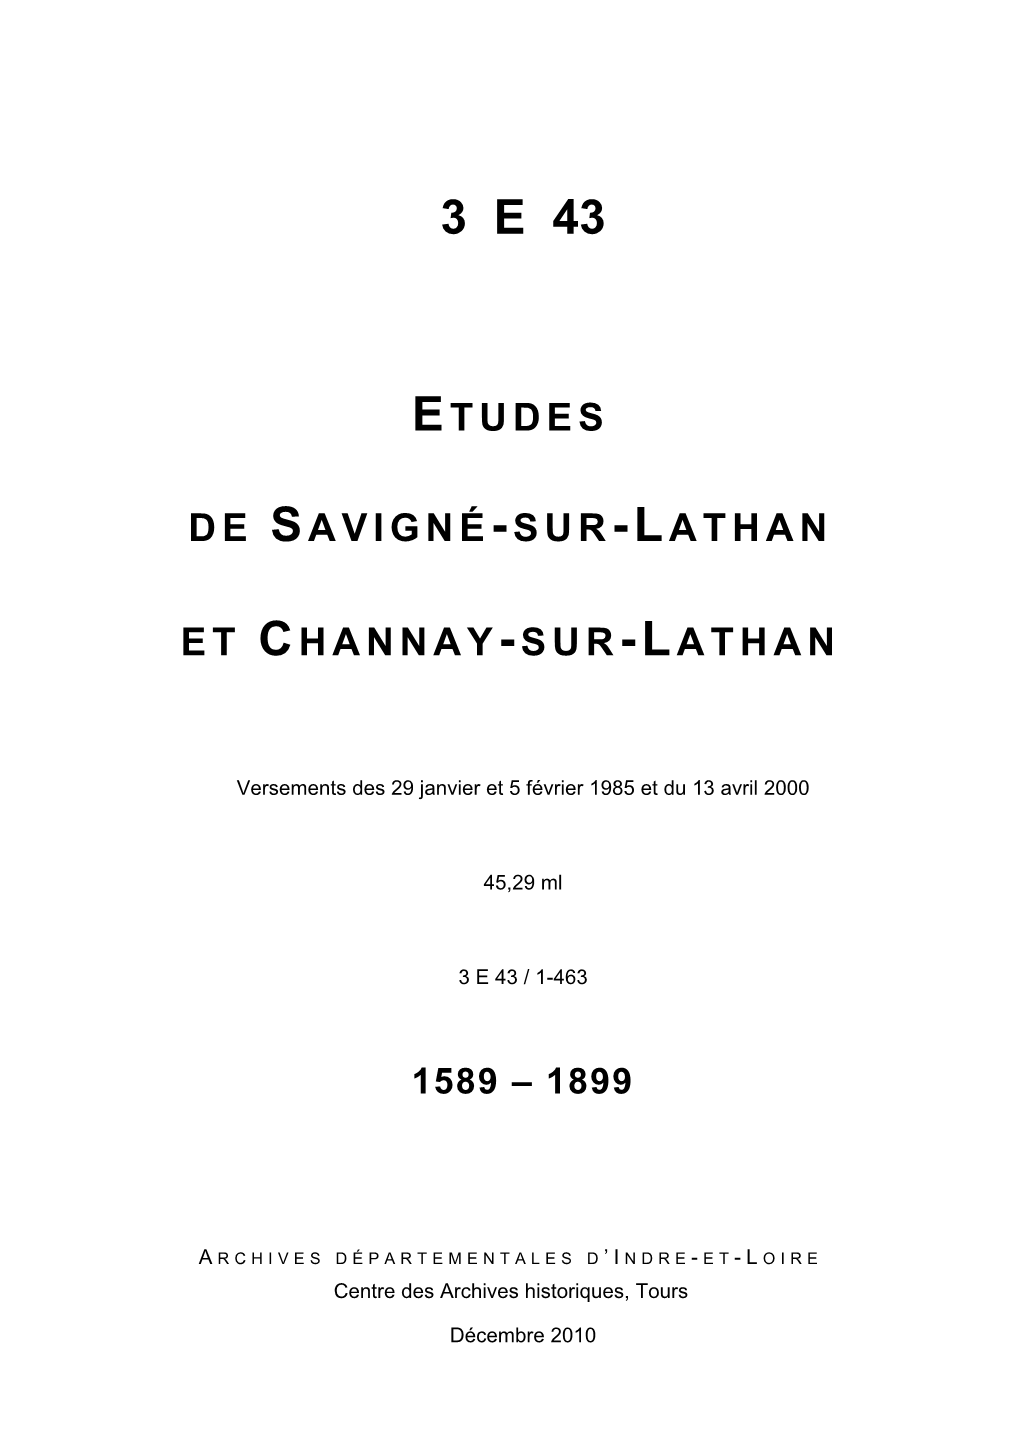 ETUDE DE CHANNAY-SUR-LATHAN (An VIII-1899)